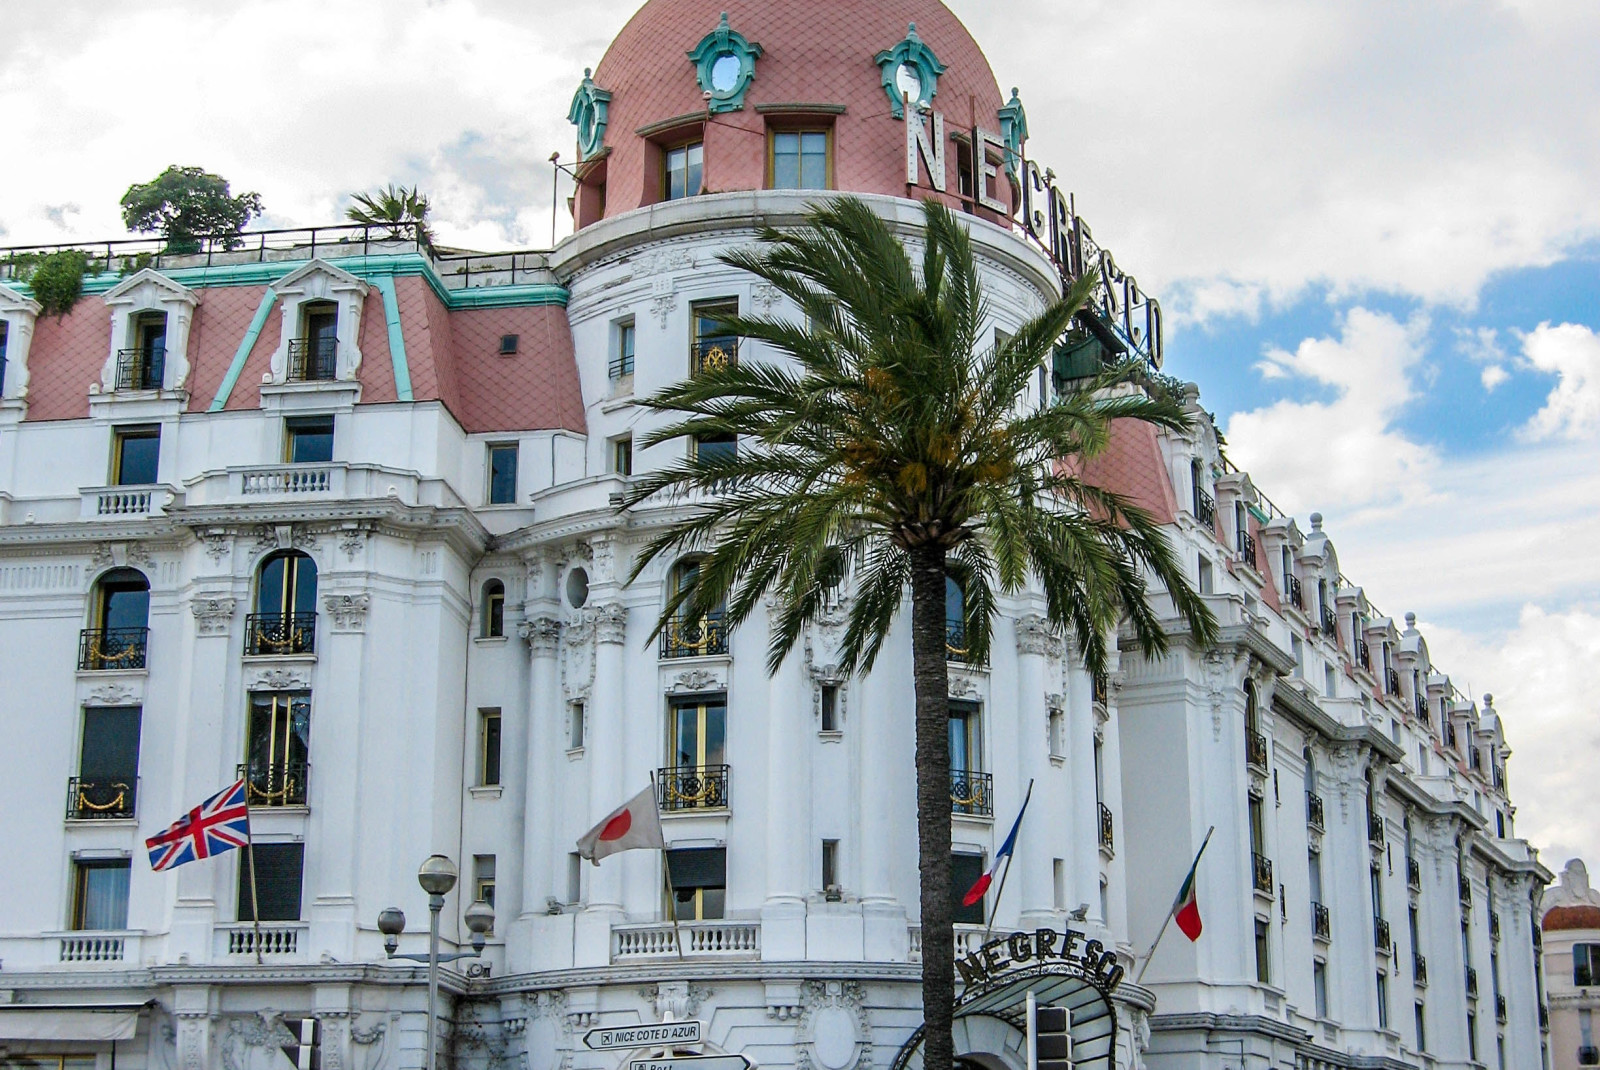 Hôtel Négresco on the Promenade des Anglais in Nice, France